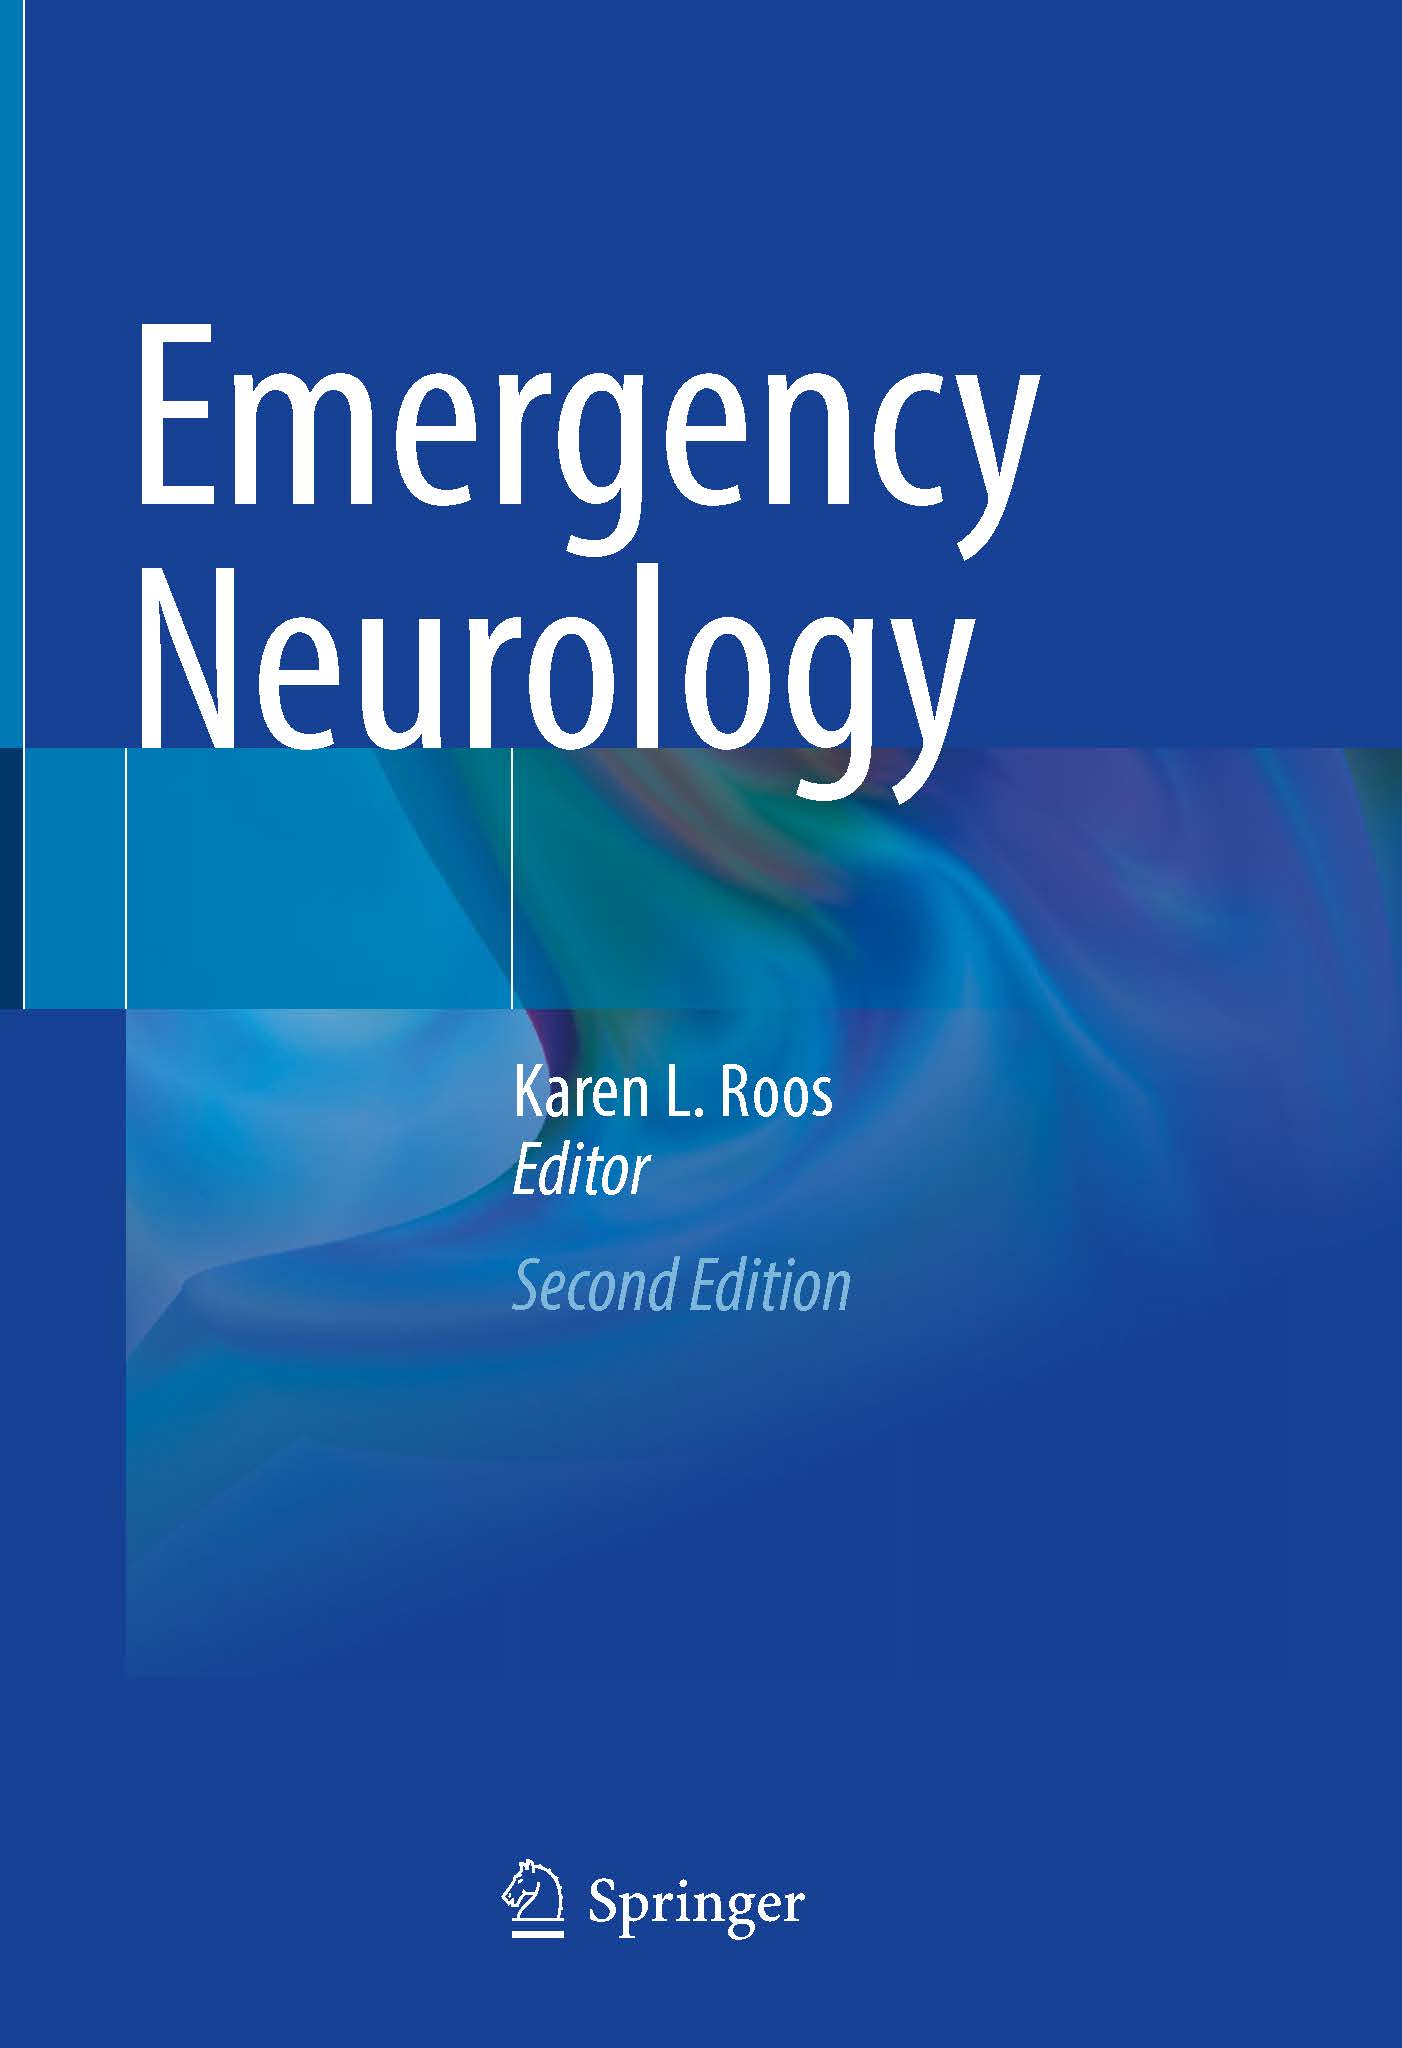 Emergency Neurology 2e 2021